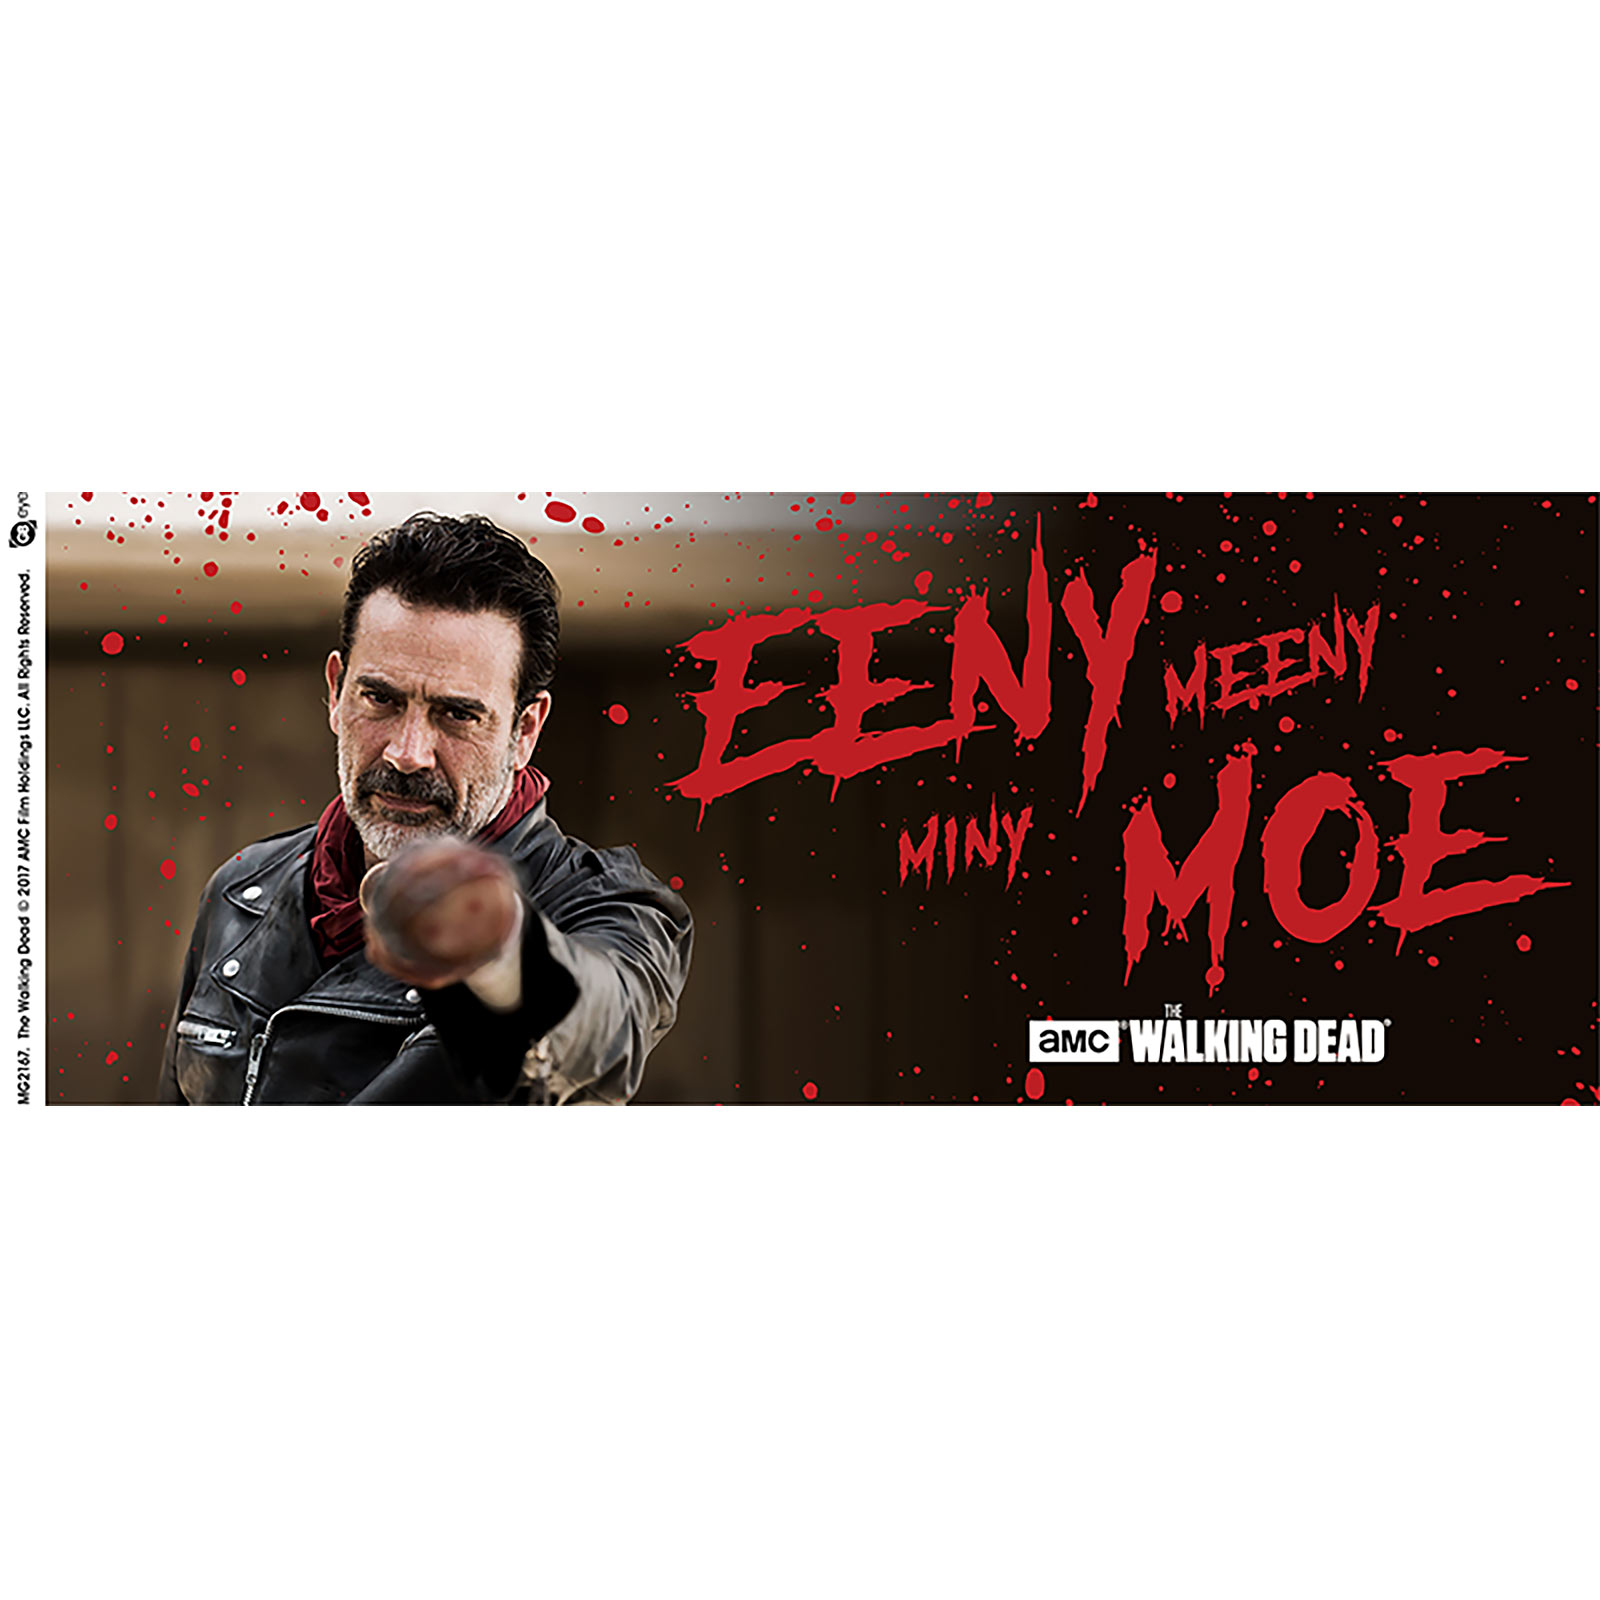 Walking Dead - Negan Eeny Meeny Tasse